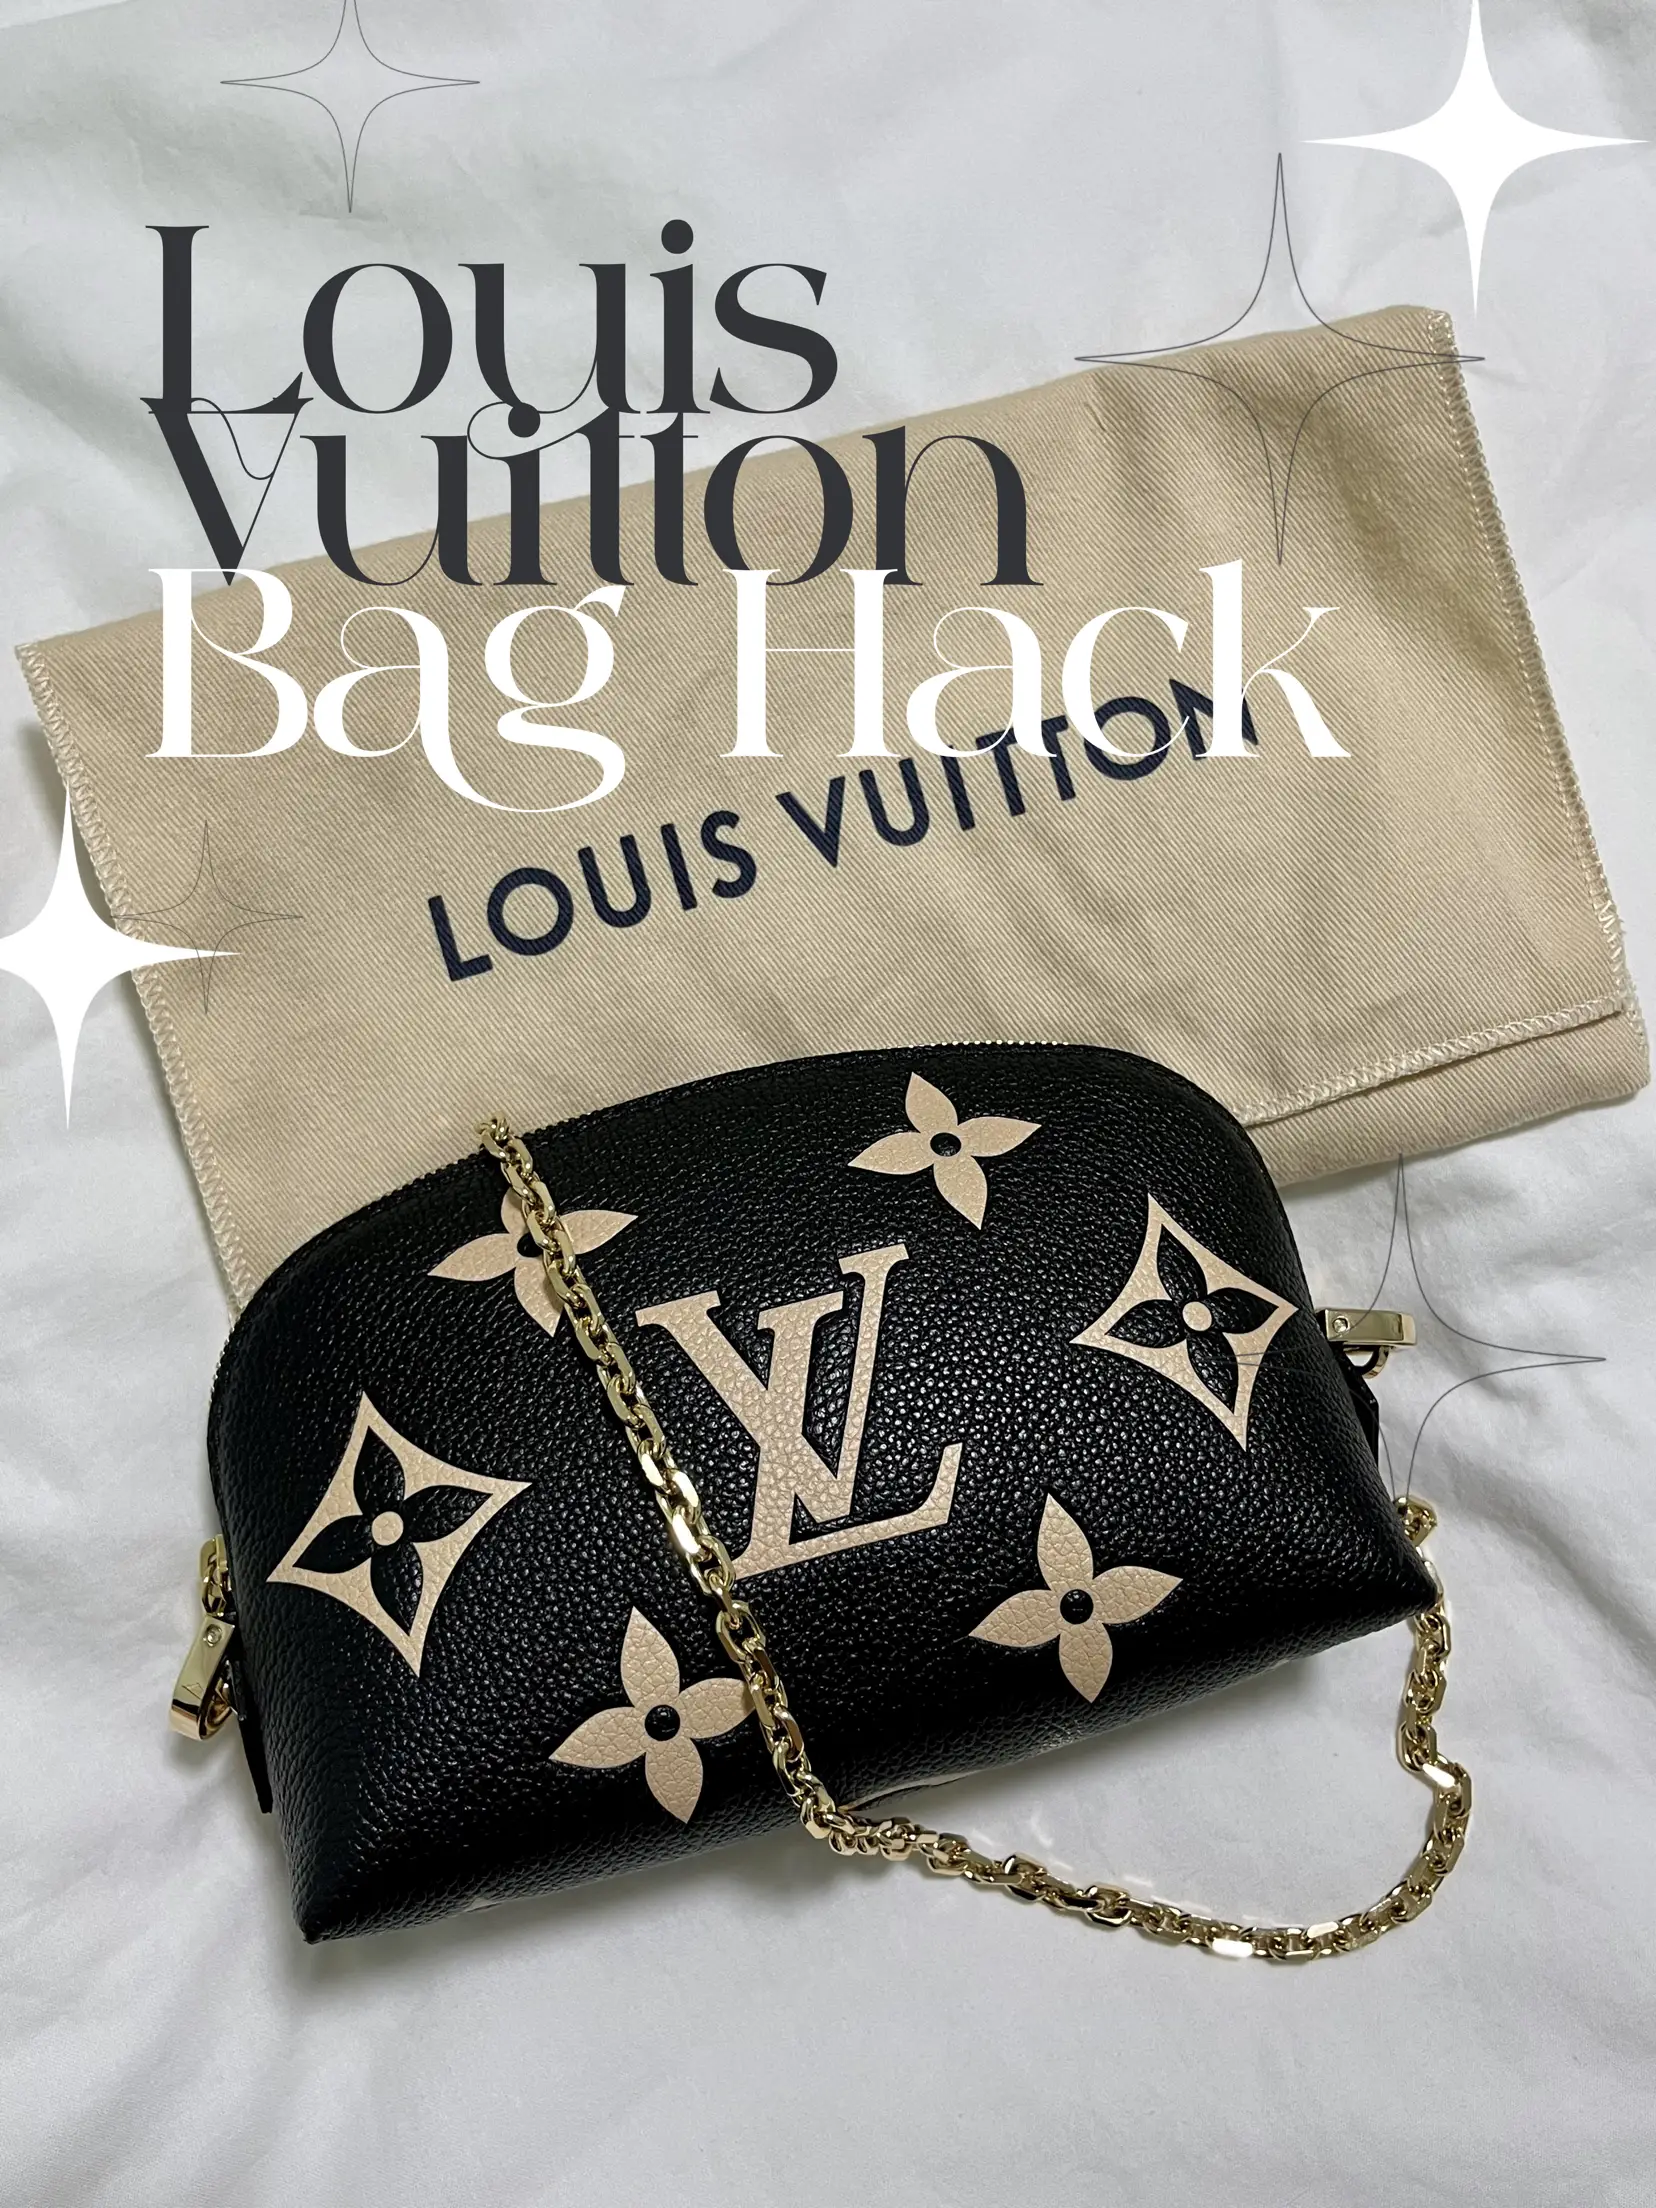 Louis Vuitton struck gold with this one!! #louisvuitton #louisvuitton